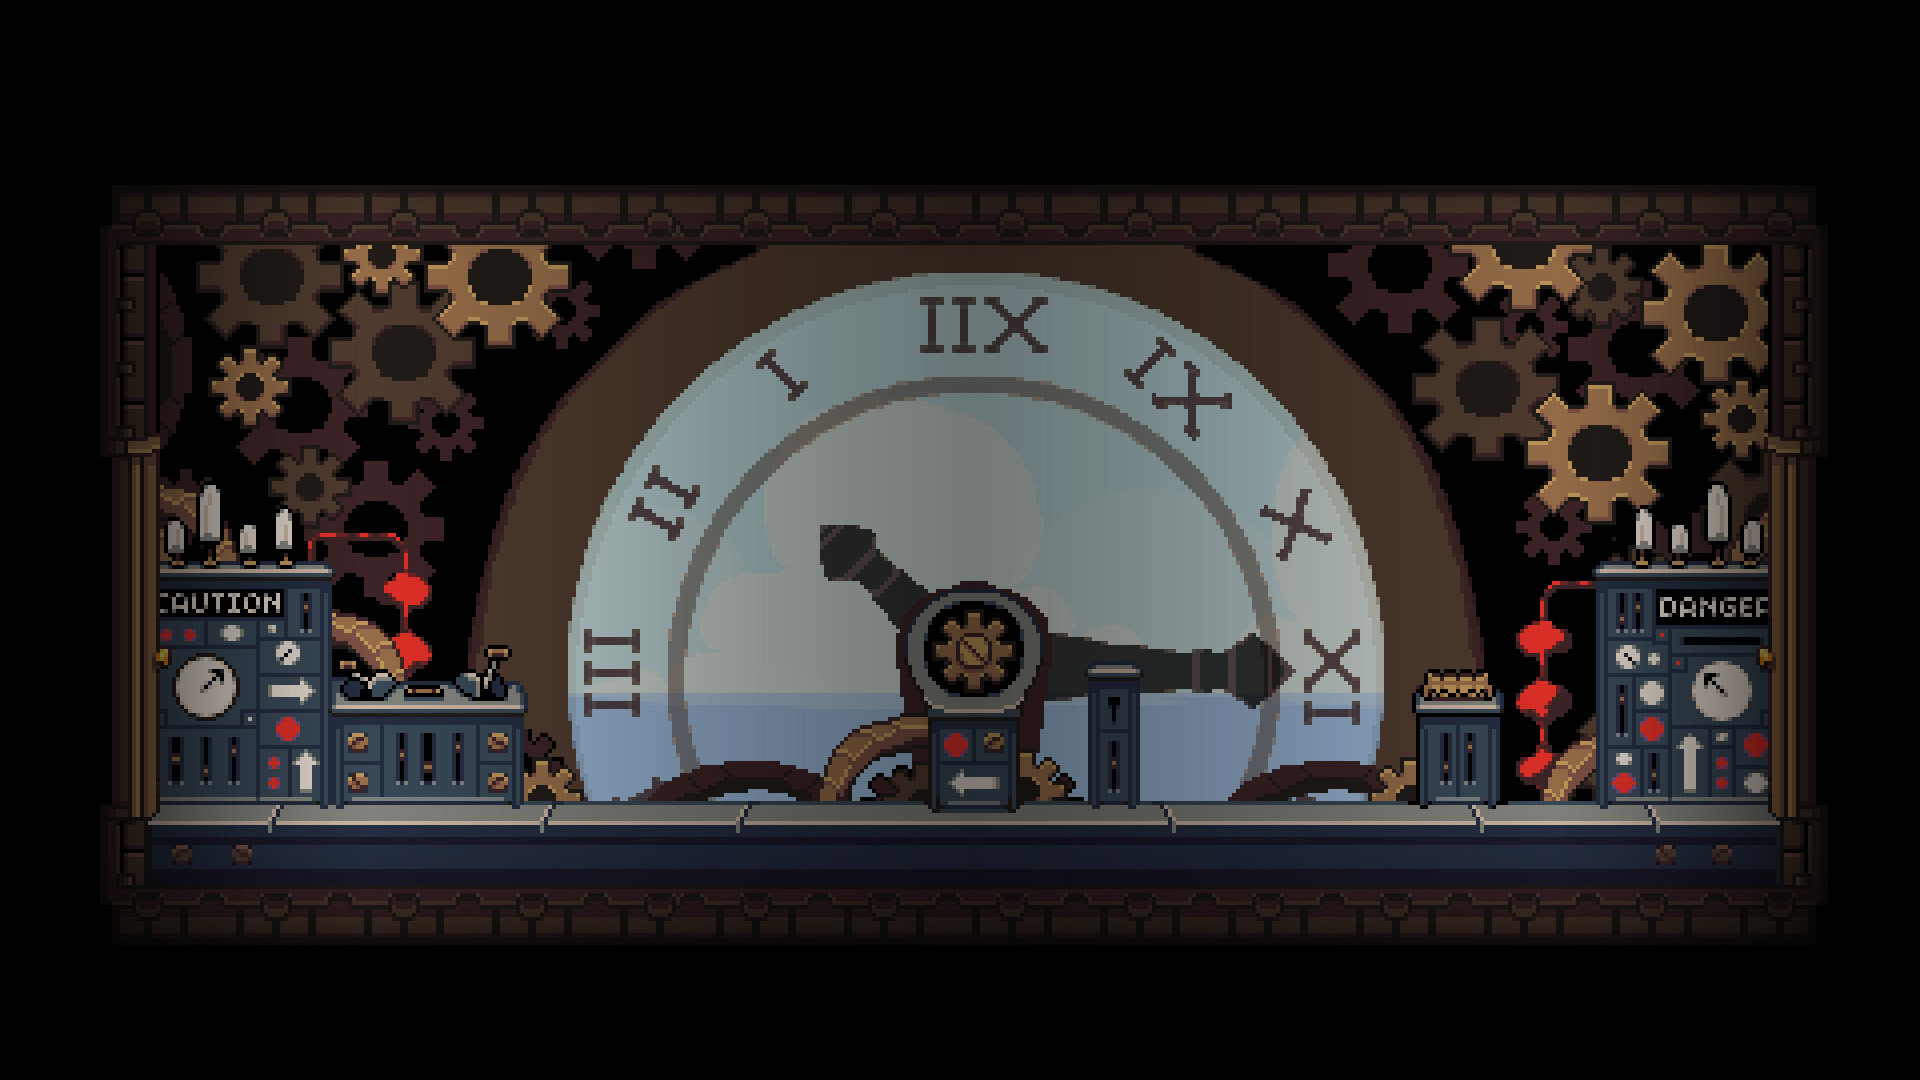 General 1920x1080 digital art pixel art pixels pixelated gears clocks Roman numerals video games black background